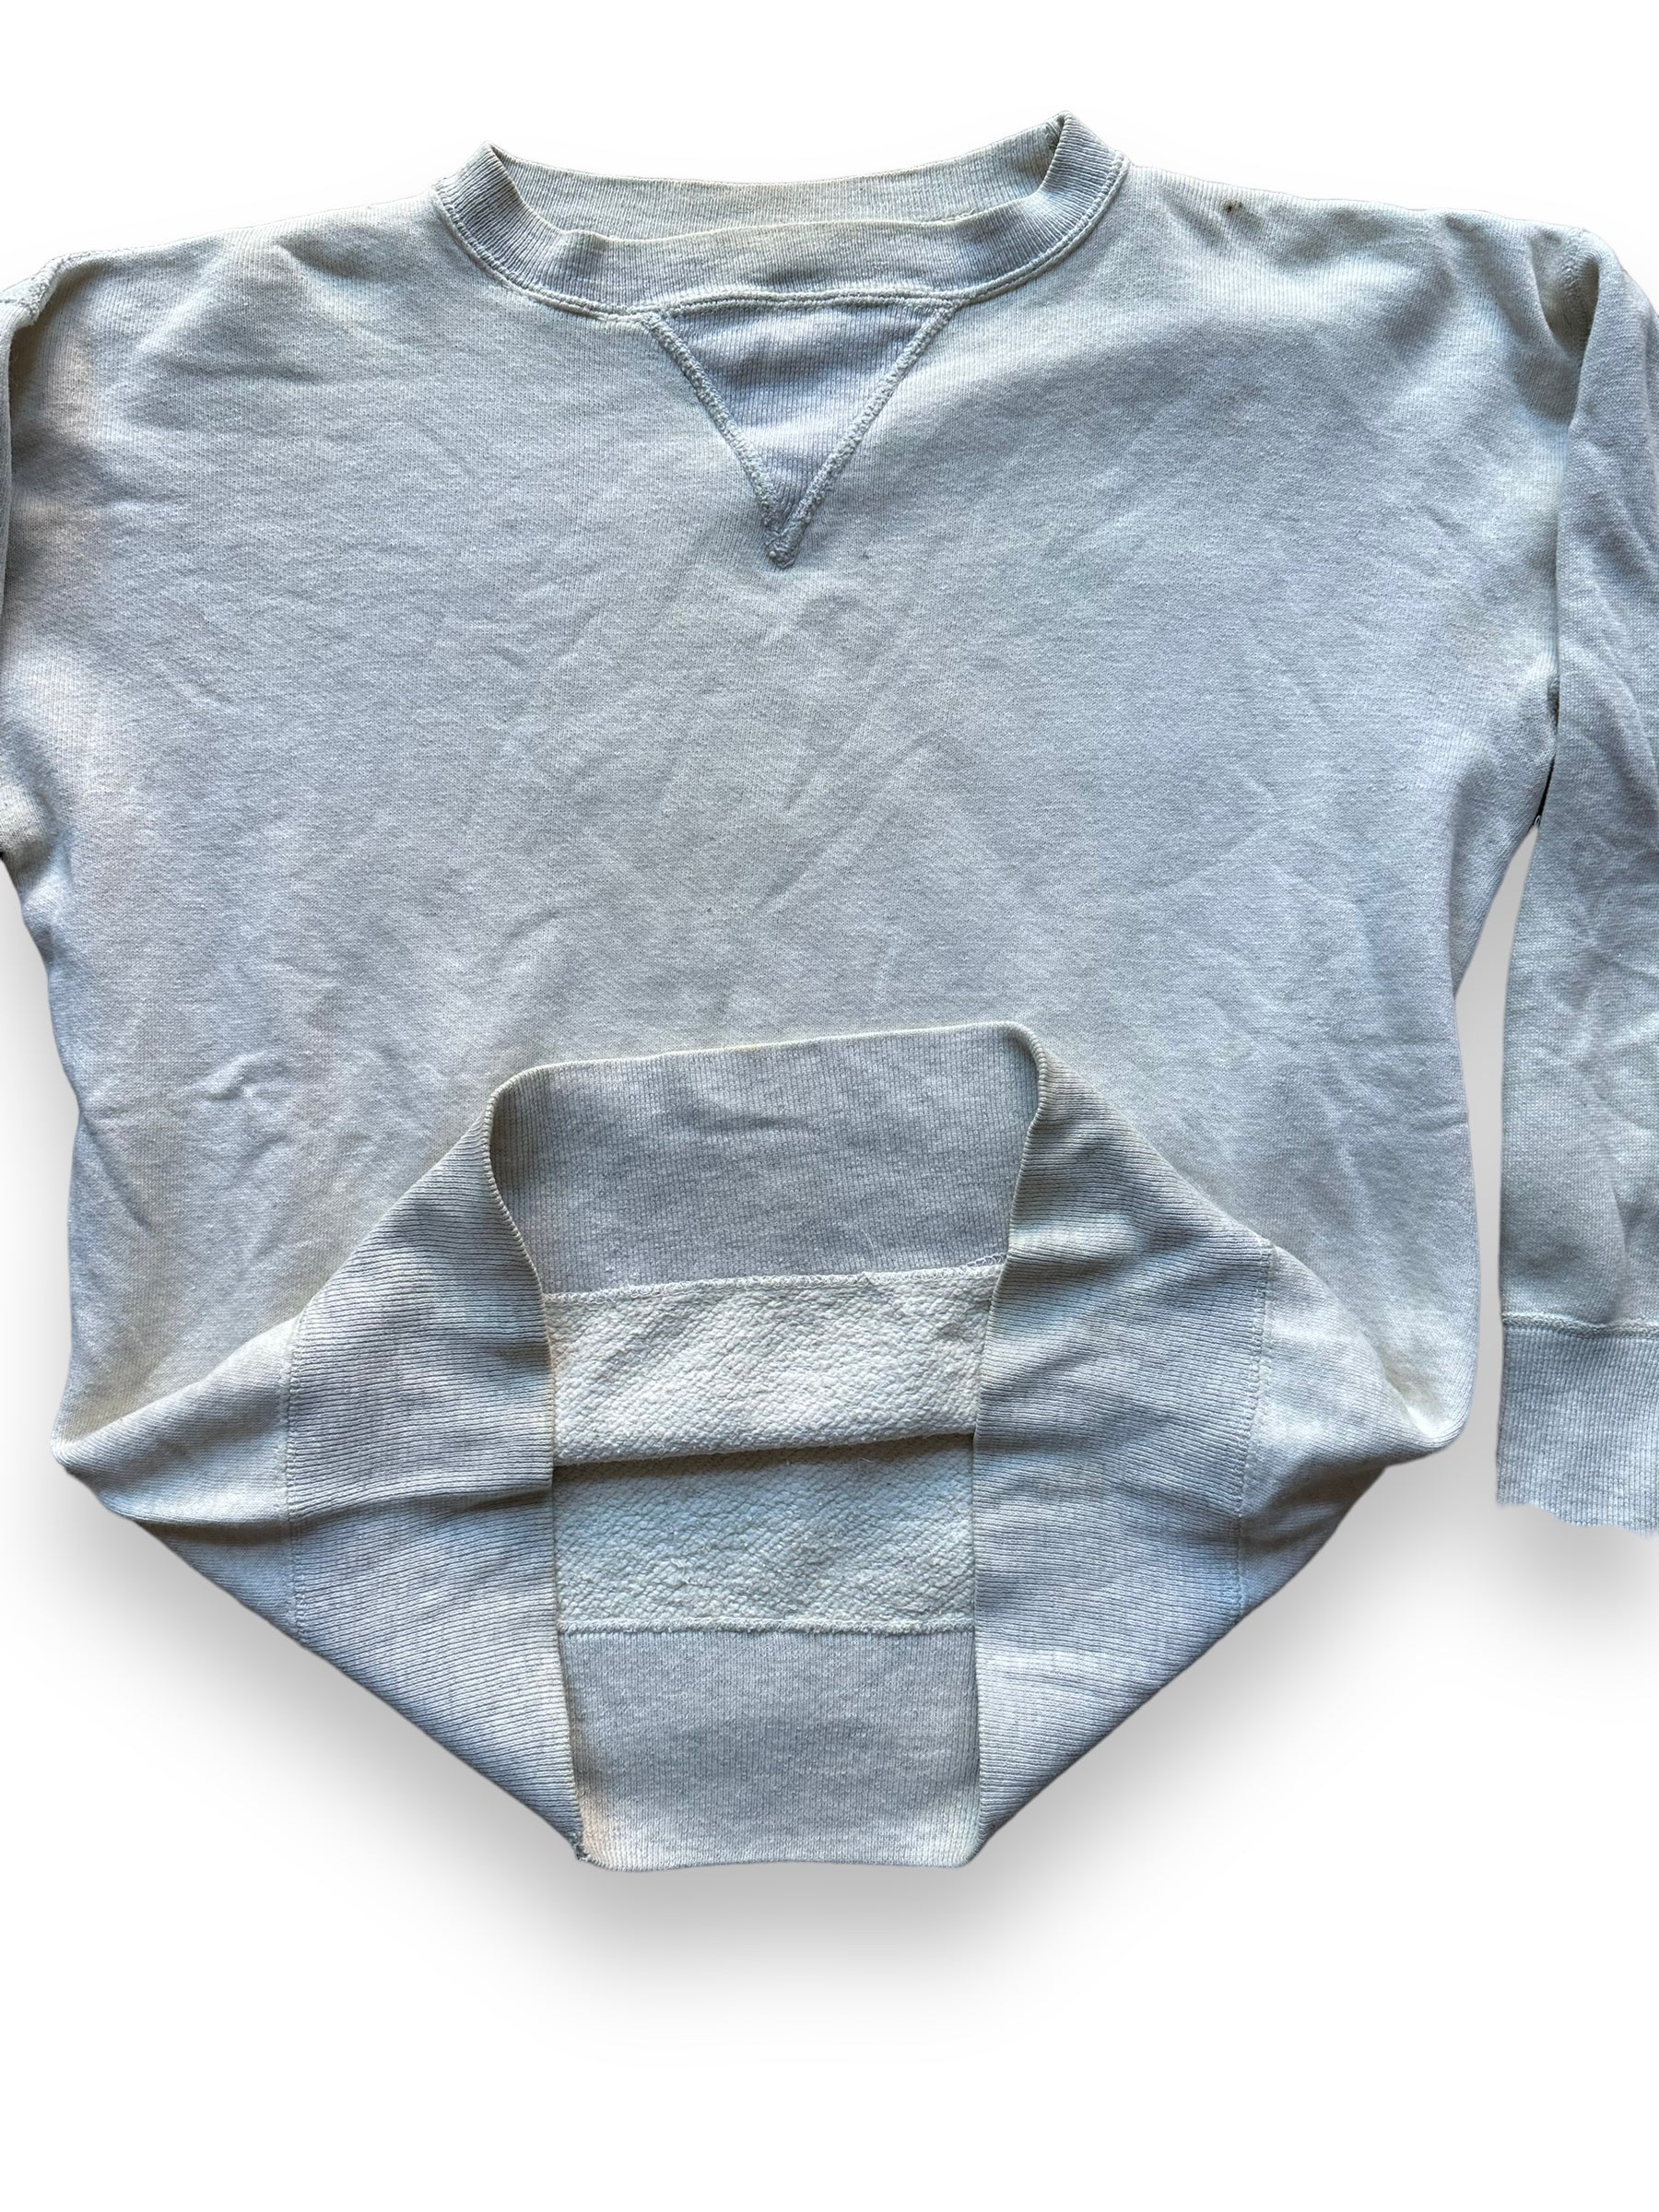 Inside View of Cotton on Vintage Two Tone Single V Crewneck Sweatshirt SZ L | Vintage Crewneck Seattle | Barn Owl Vintage Clothing